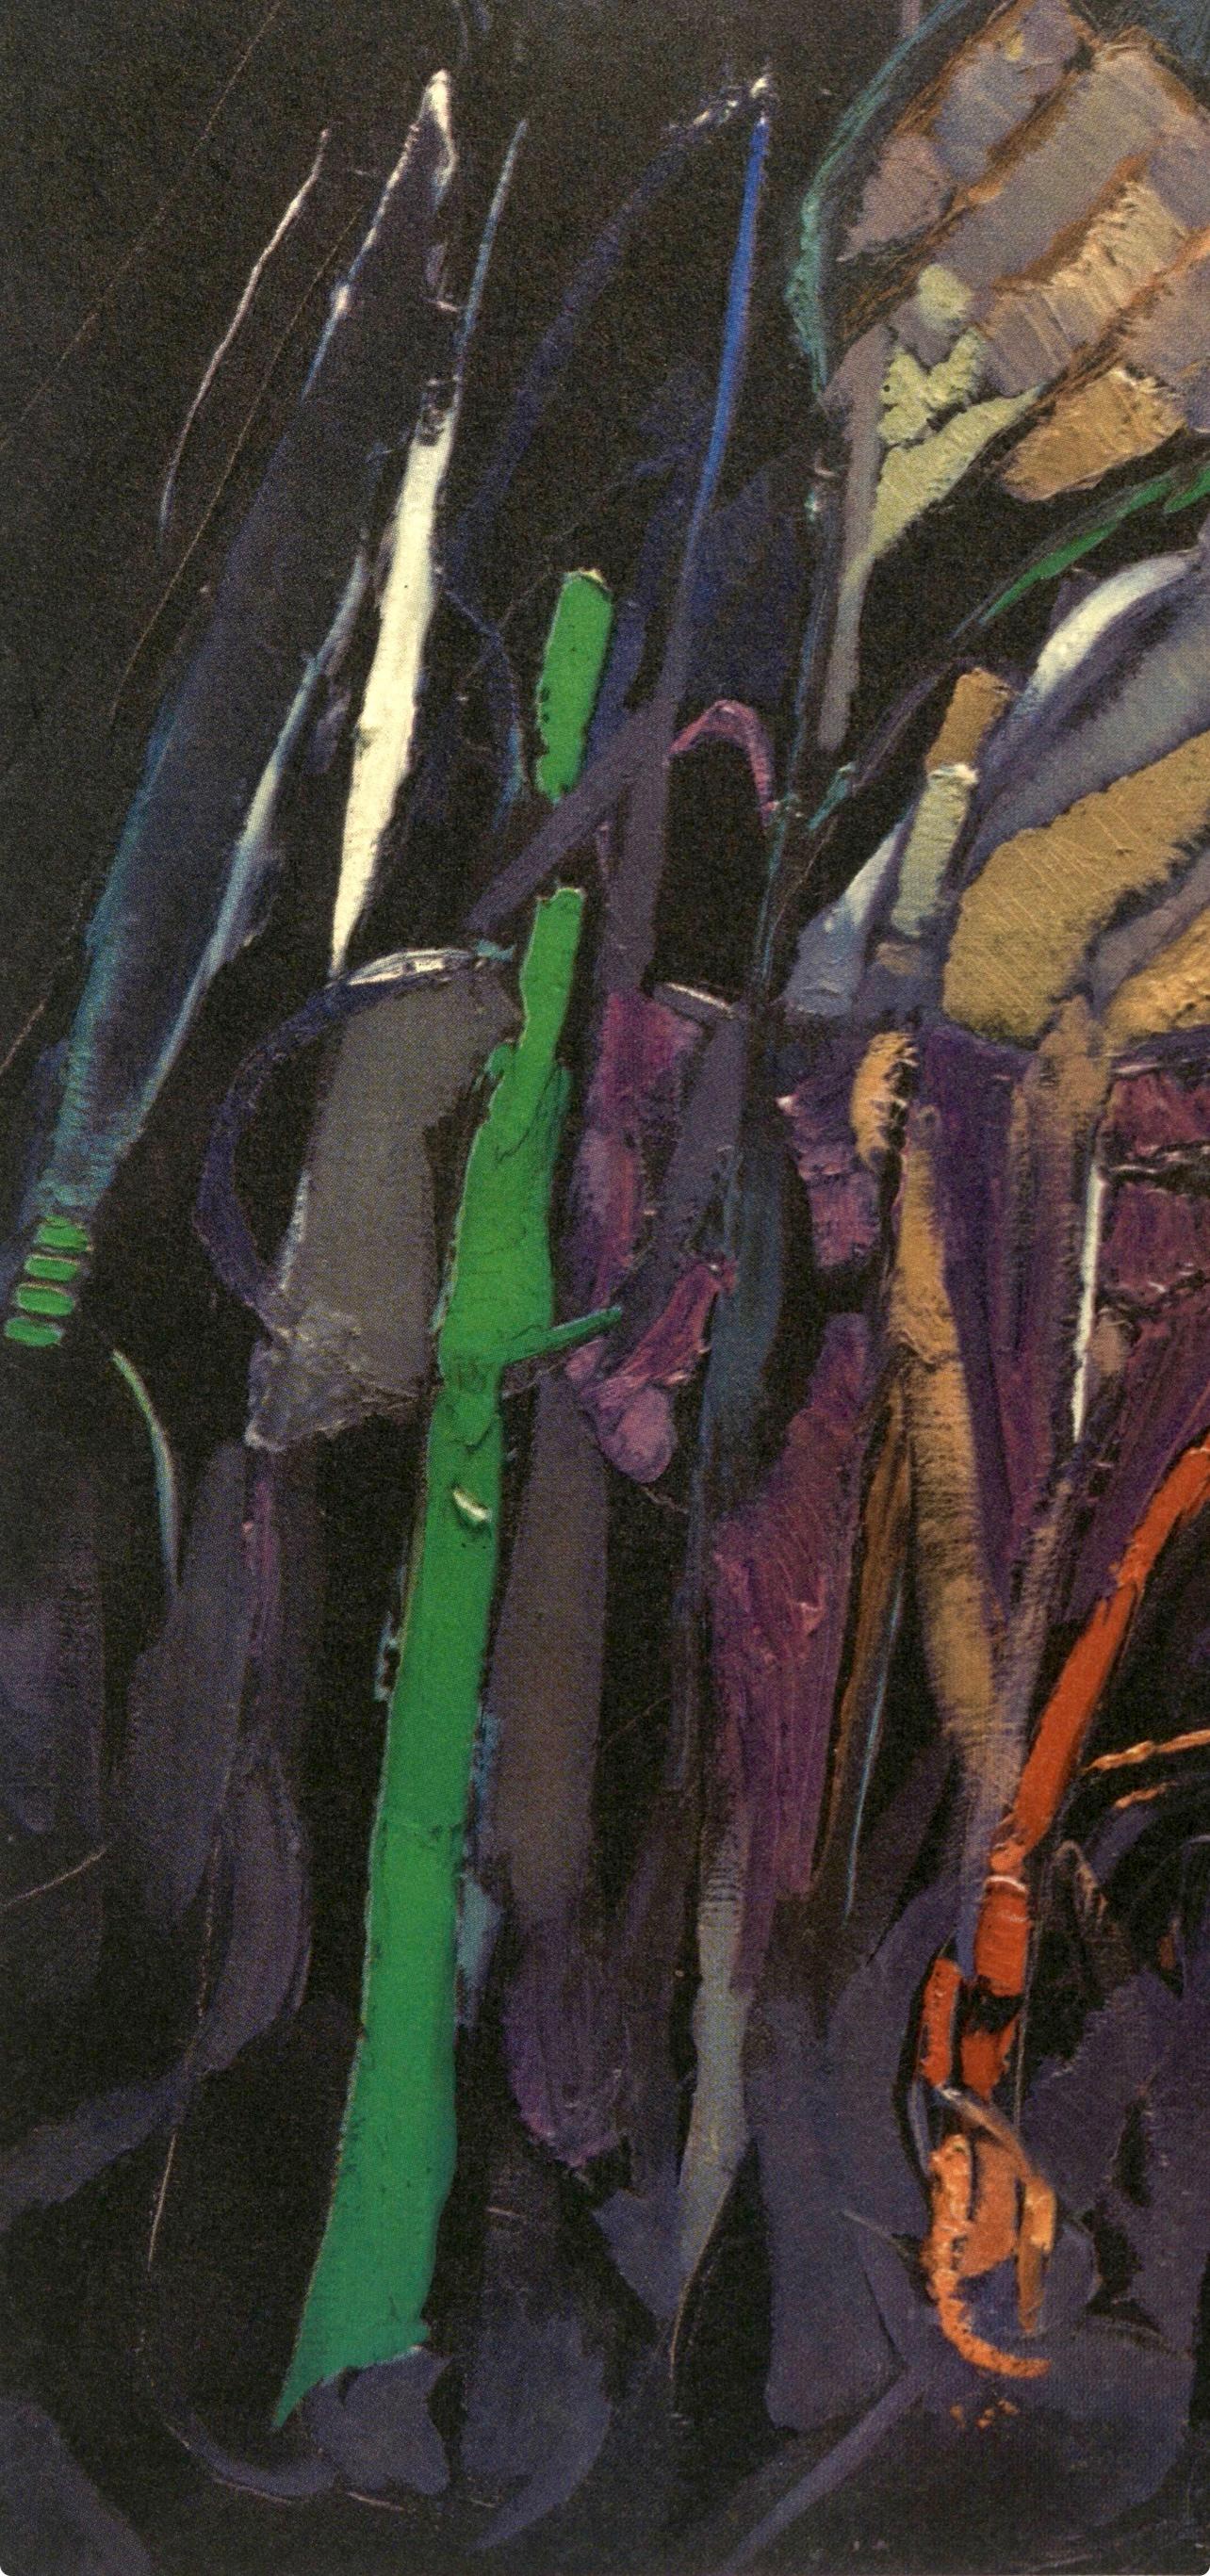 Lanskoy, Composition, André Lanskoy: Peintres d'aujourd'hui (after) For Sale 1